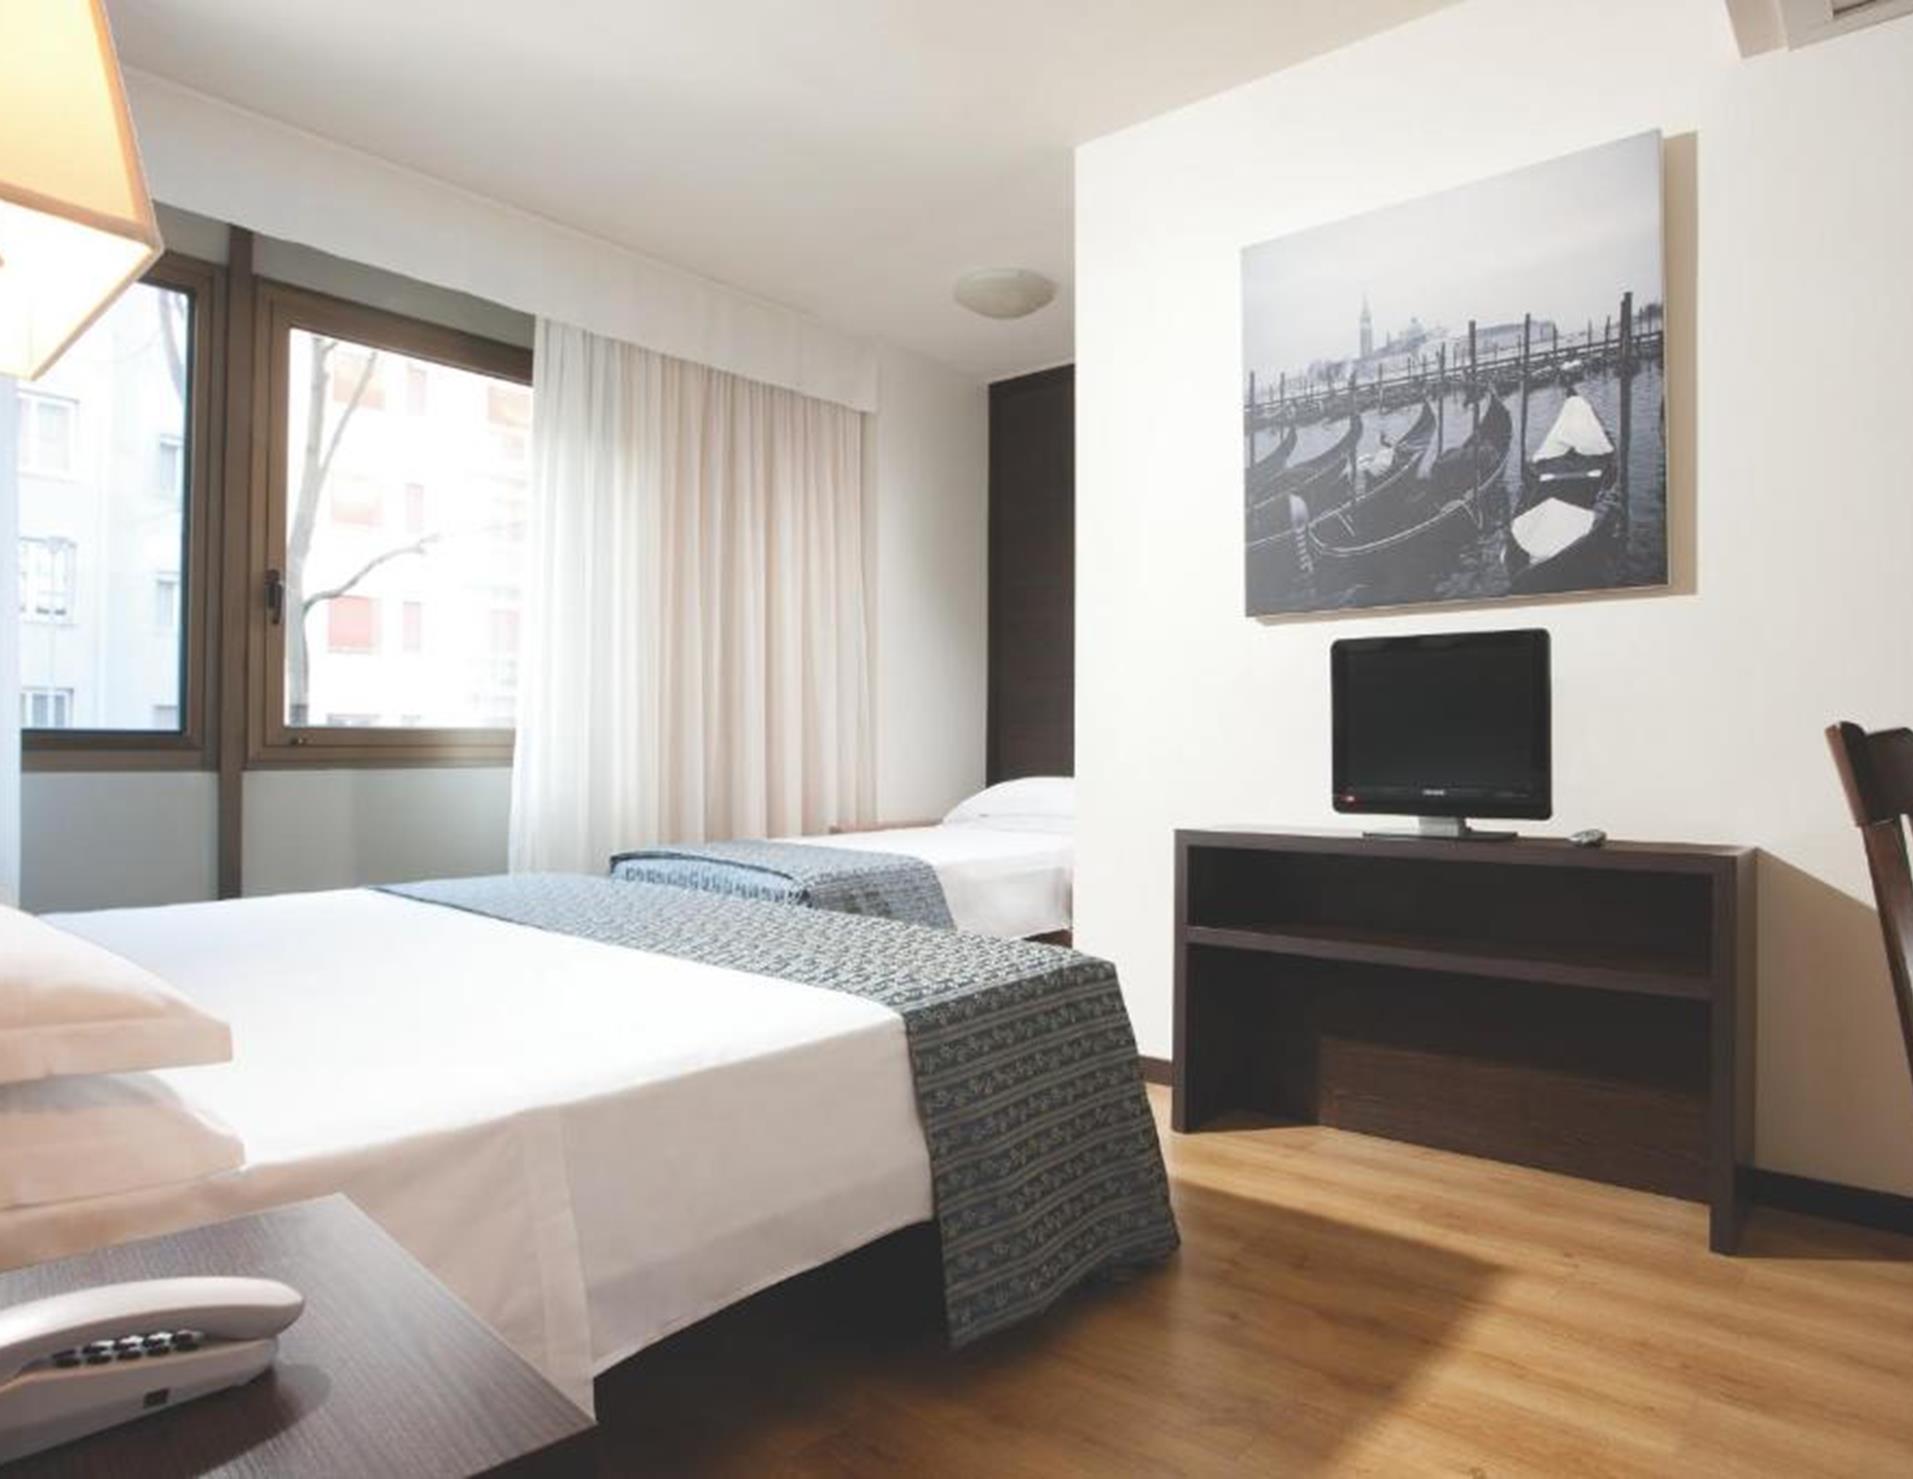 Quality Hotel Delfino - Room 6